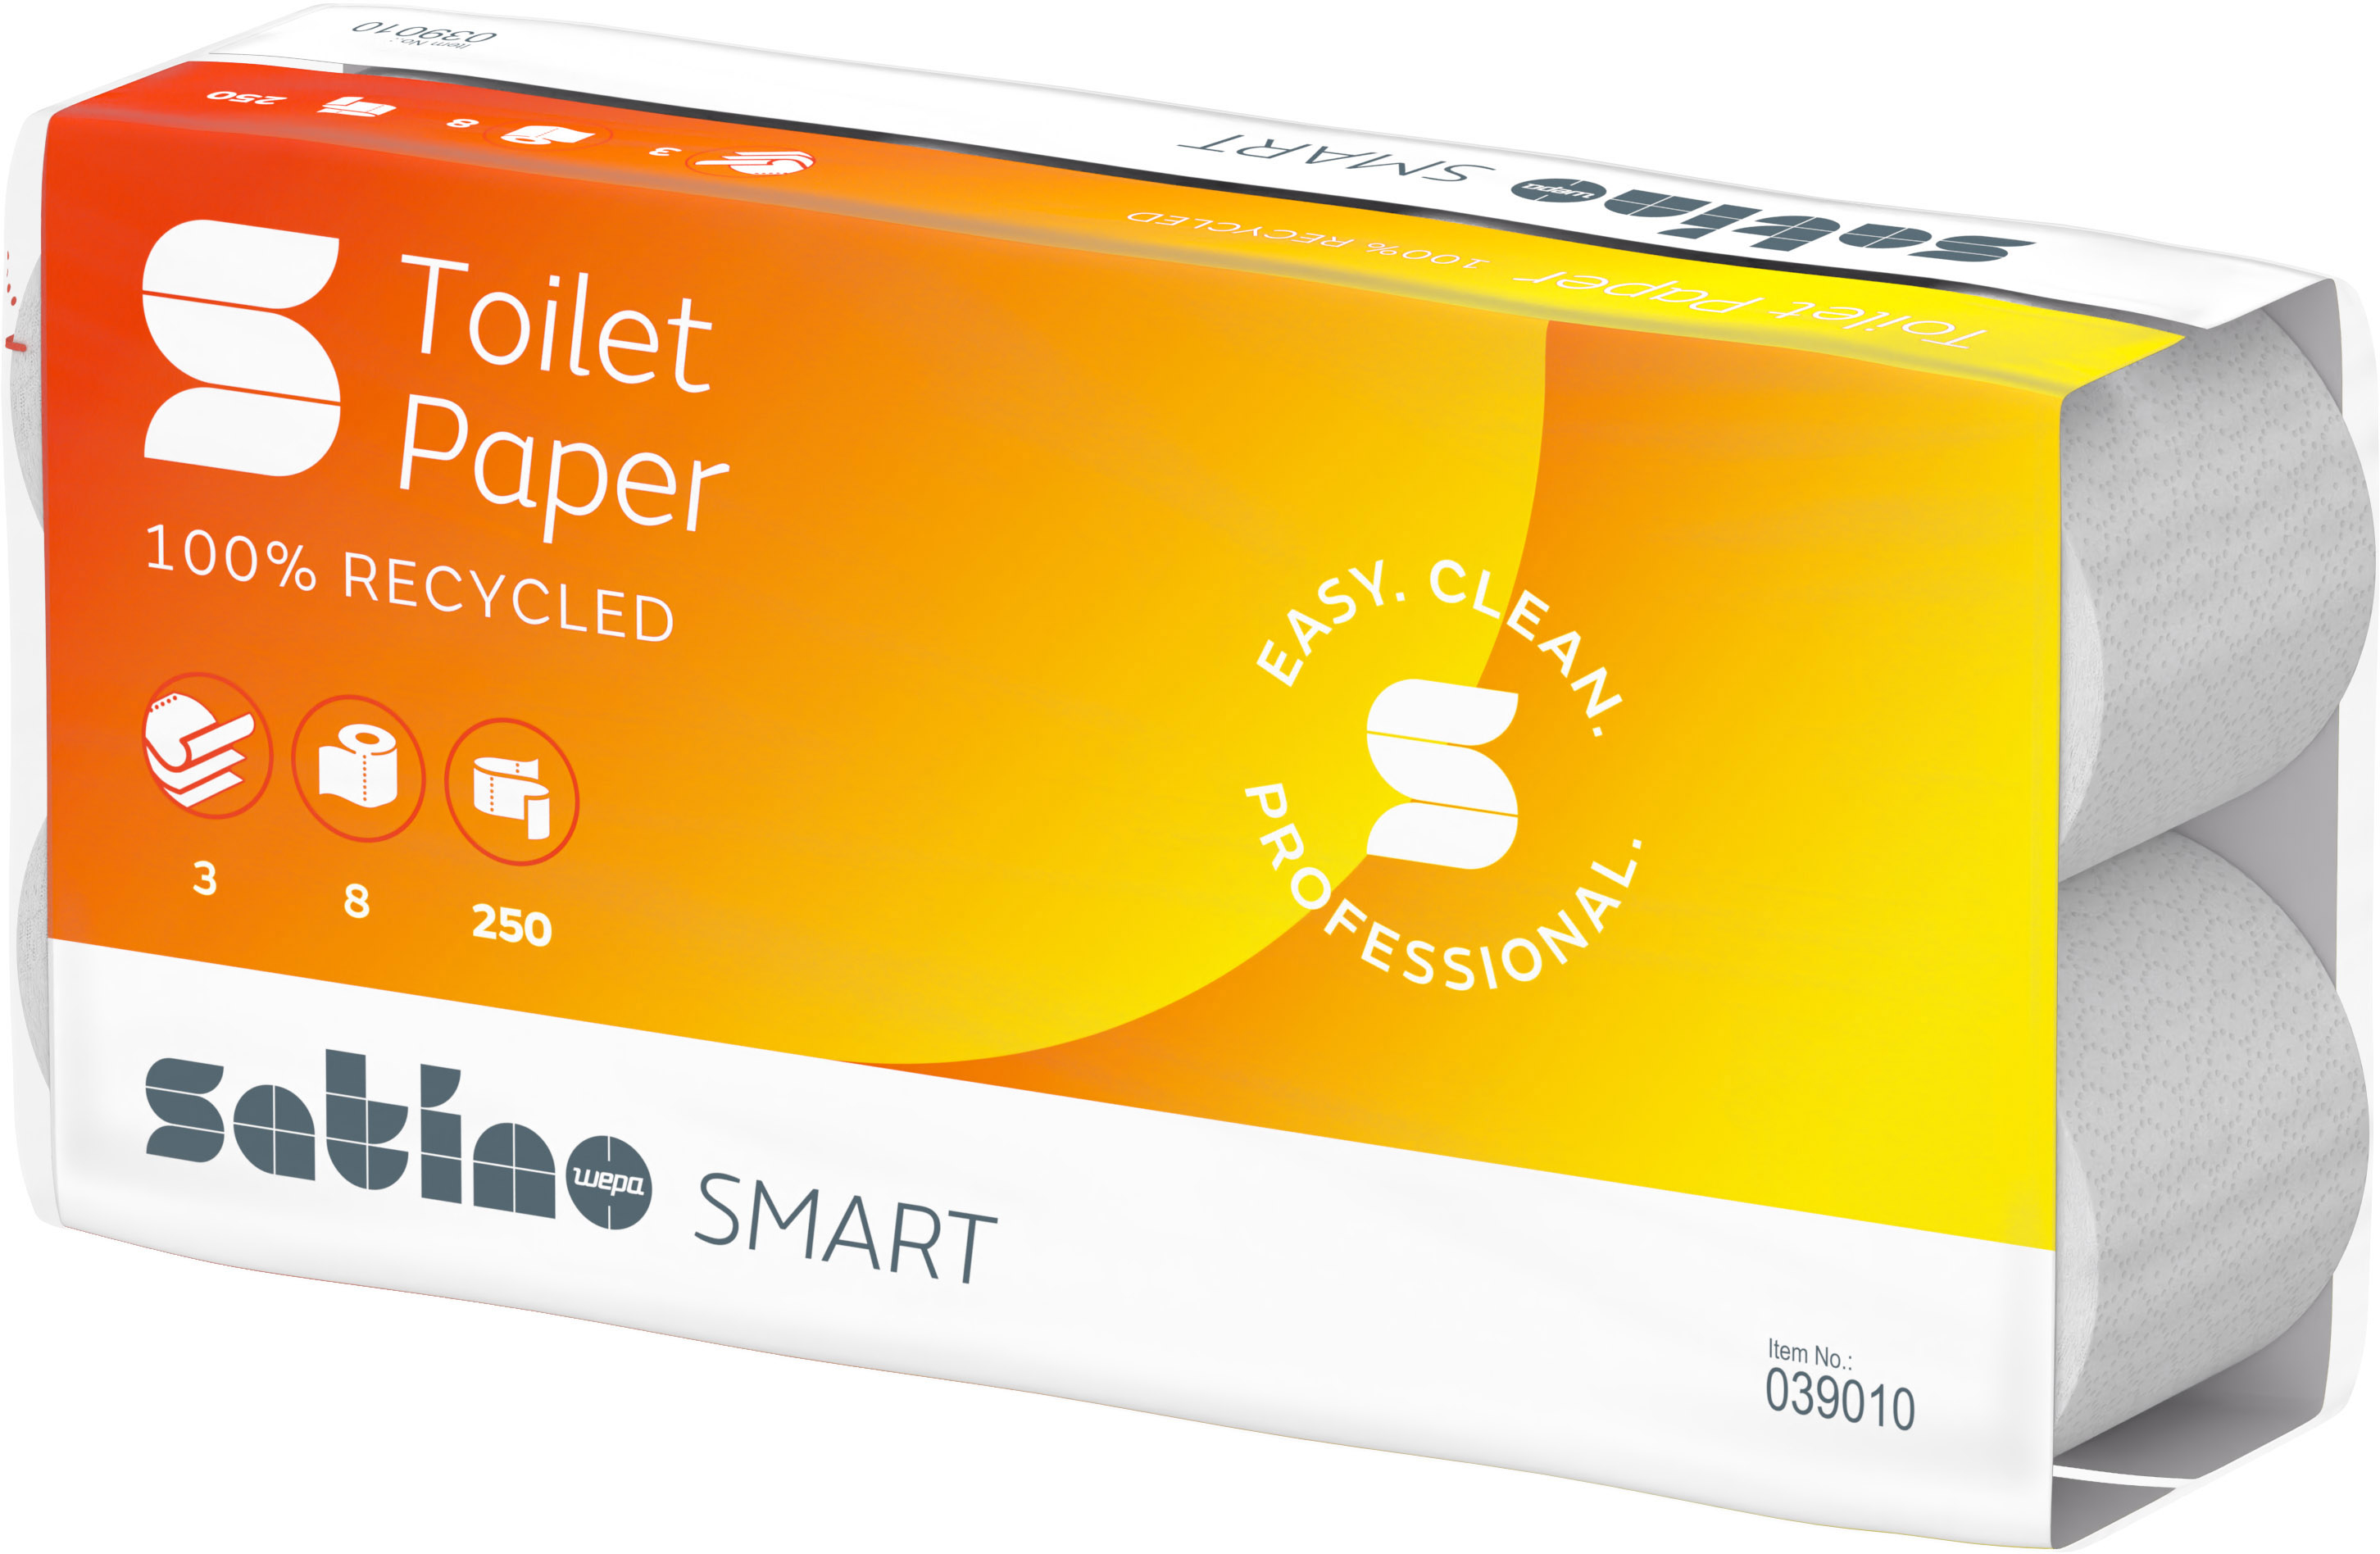 SATINO Pap. de toilette Satino Smart 2112137 3 plis, 8 roul., recycled